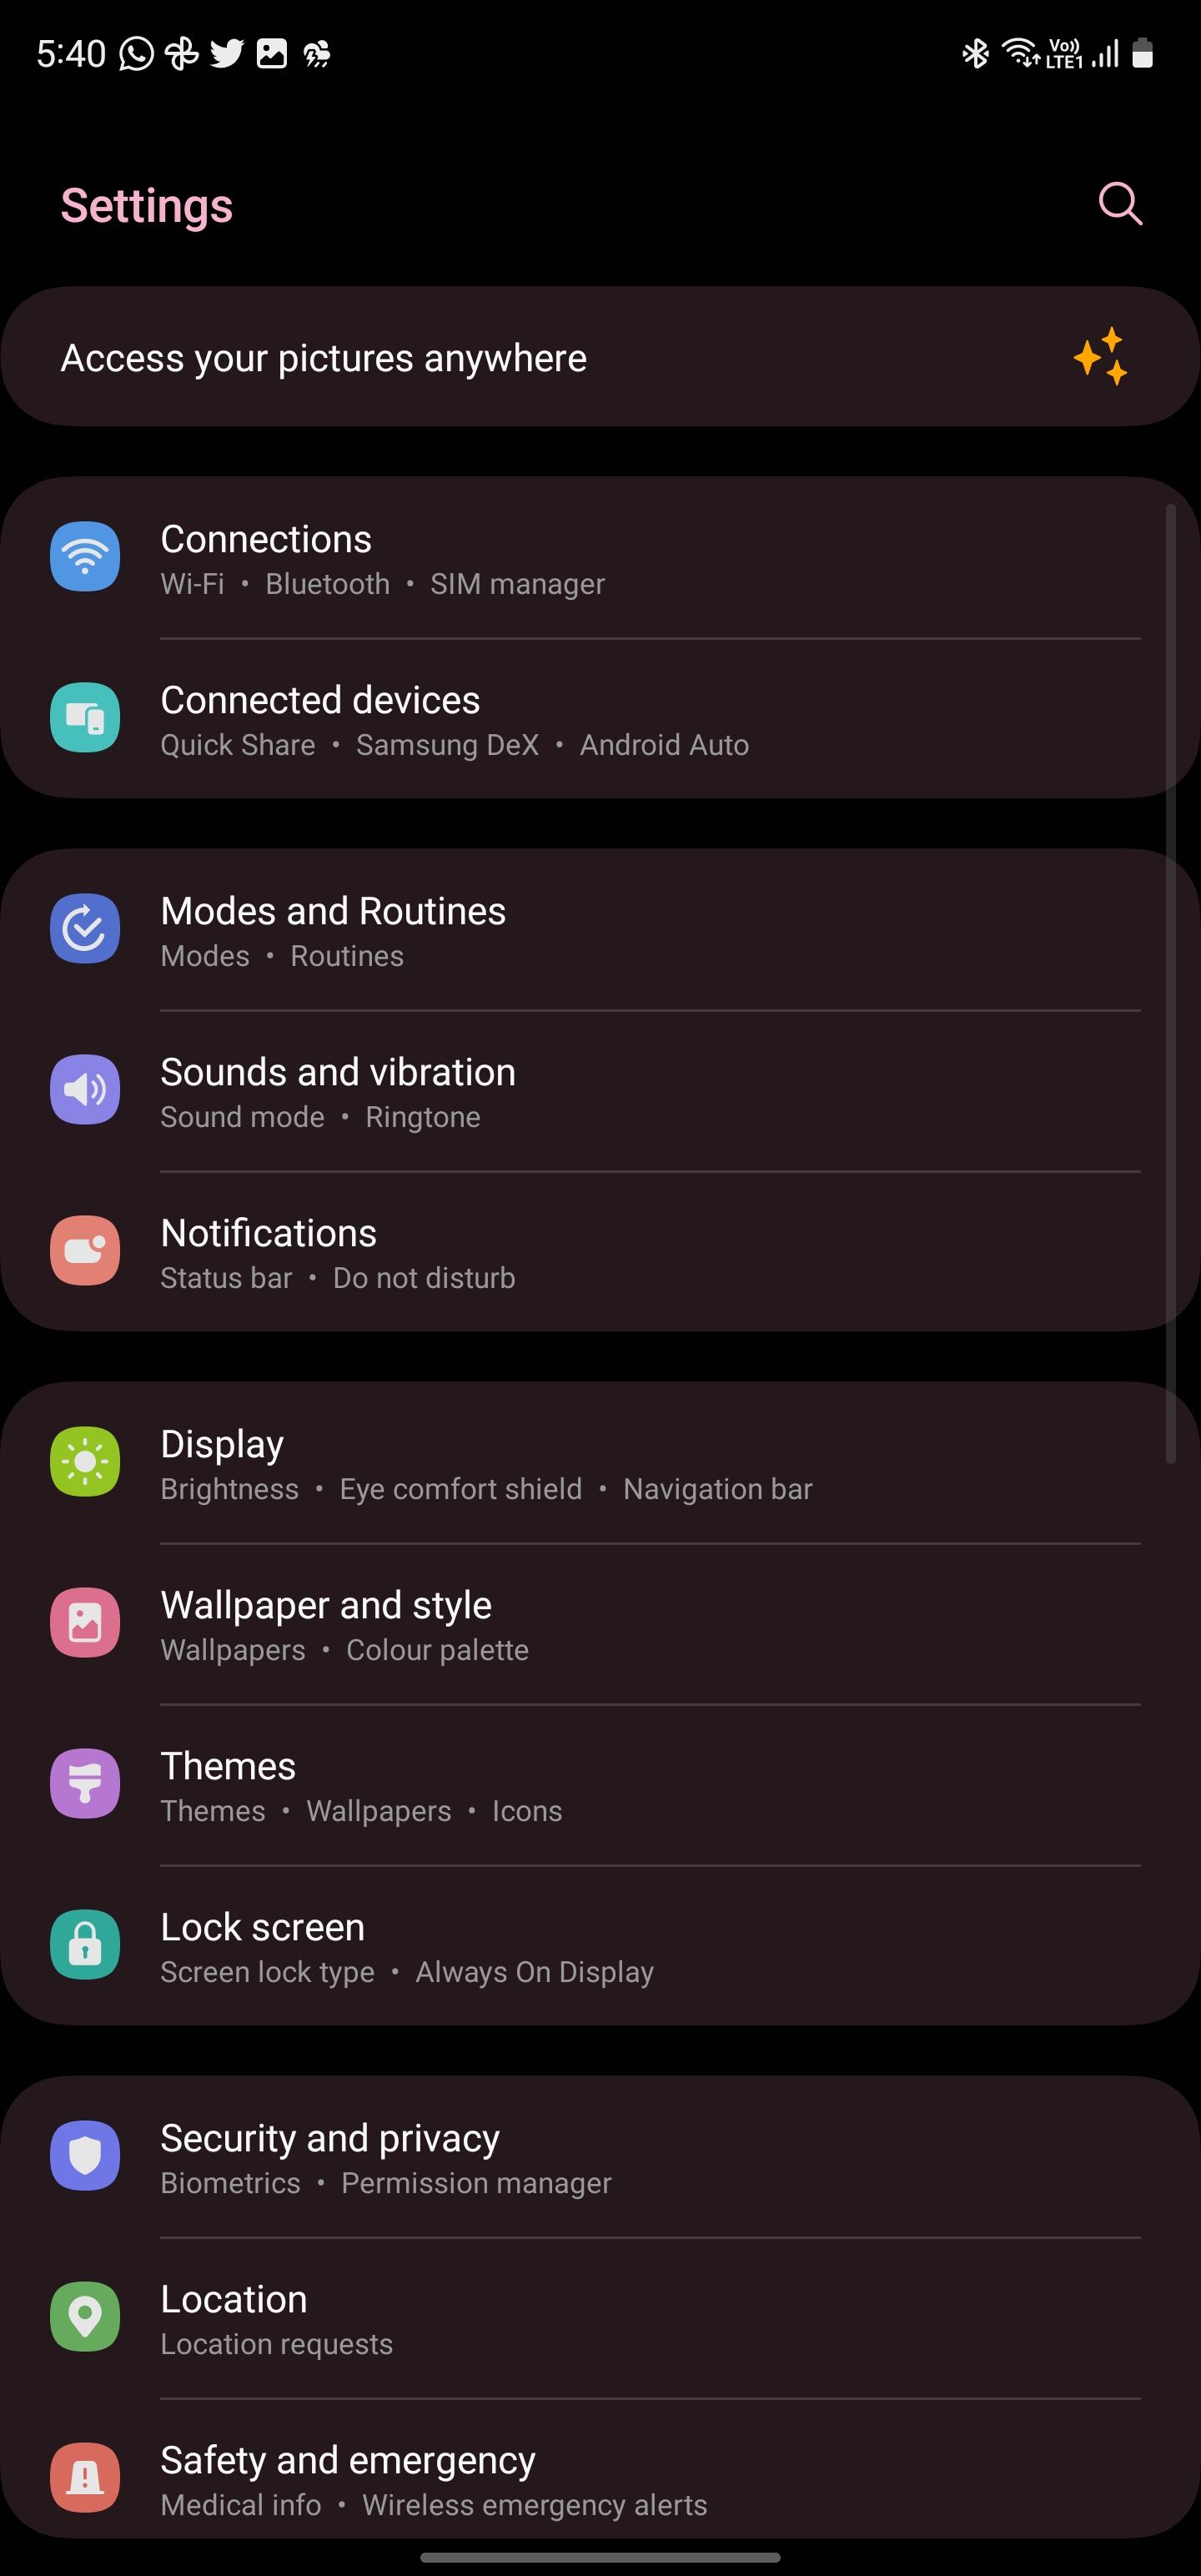 Settings menu on Samsung phone